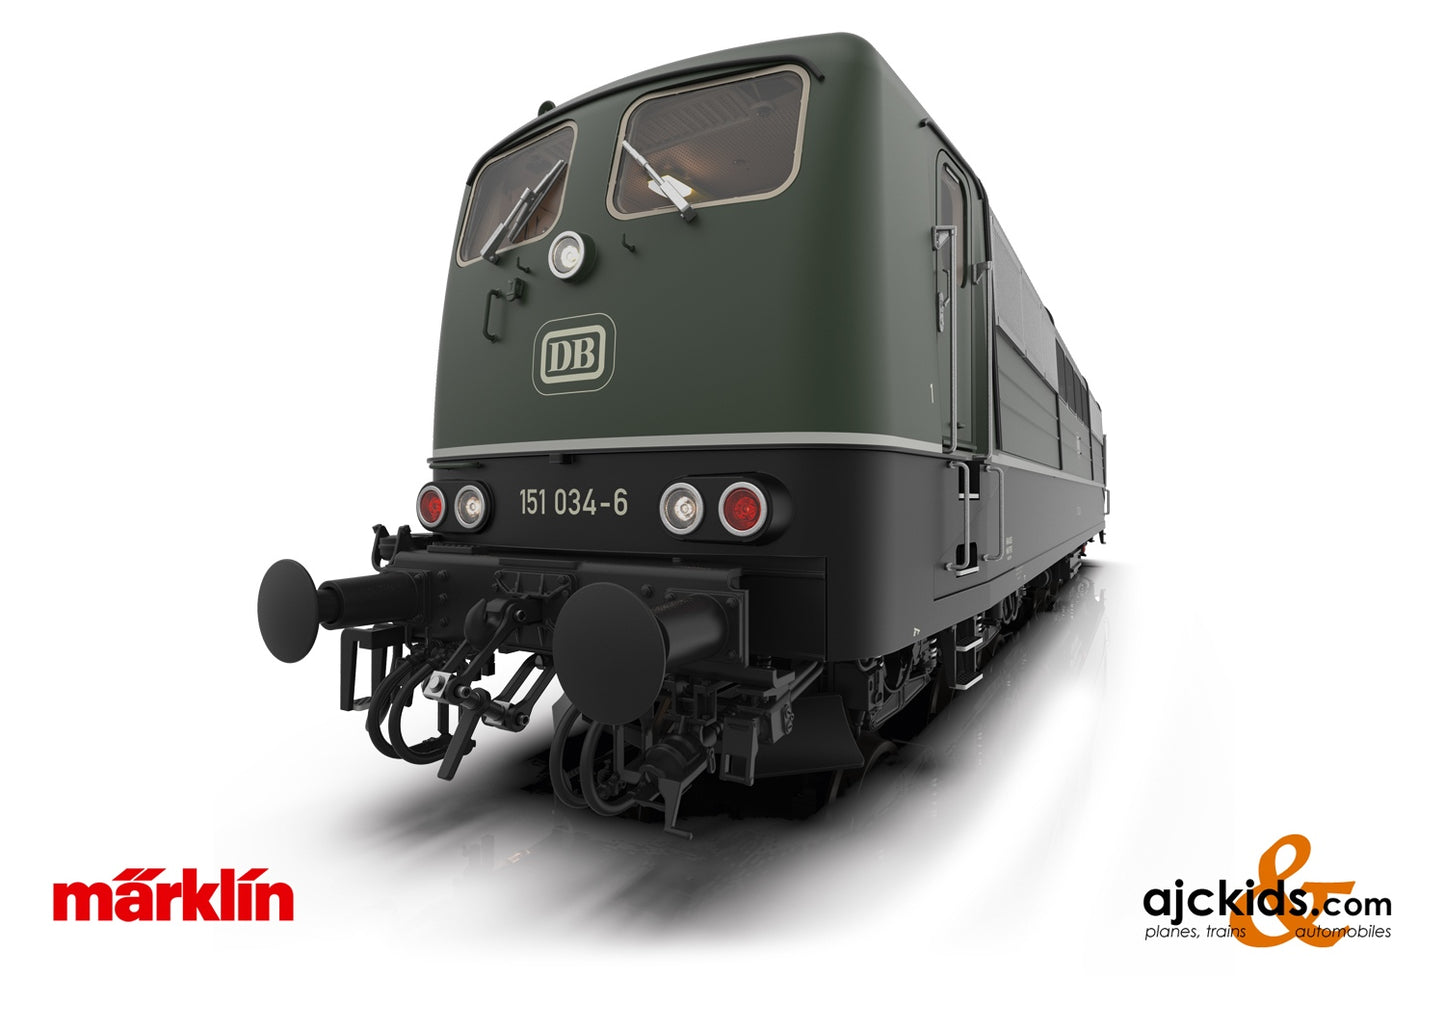 Marklin 55251 - Class 151 Electric Locomotive